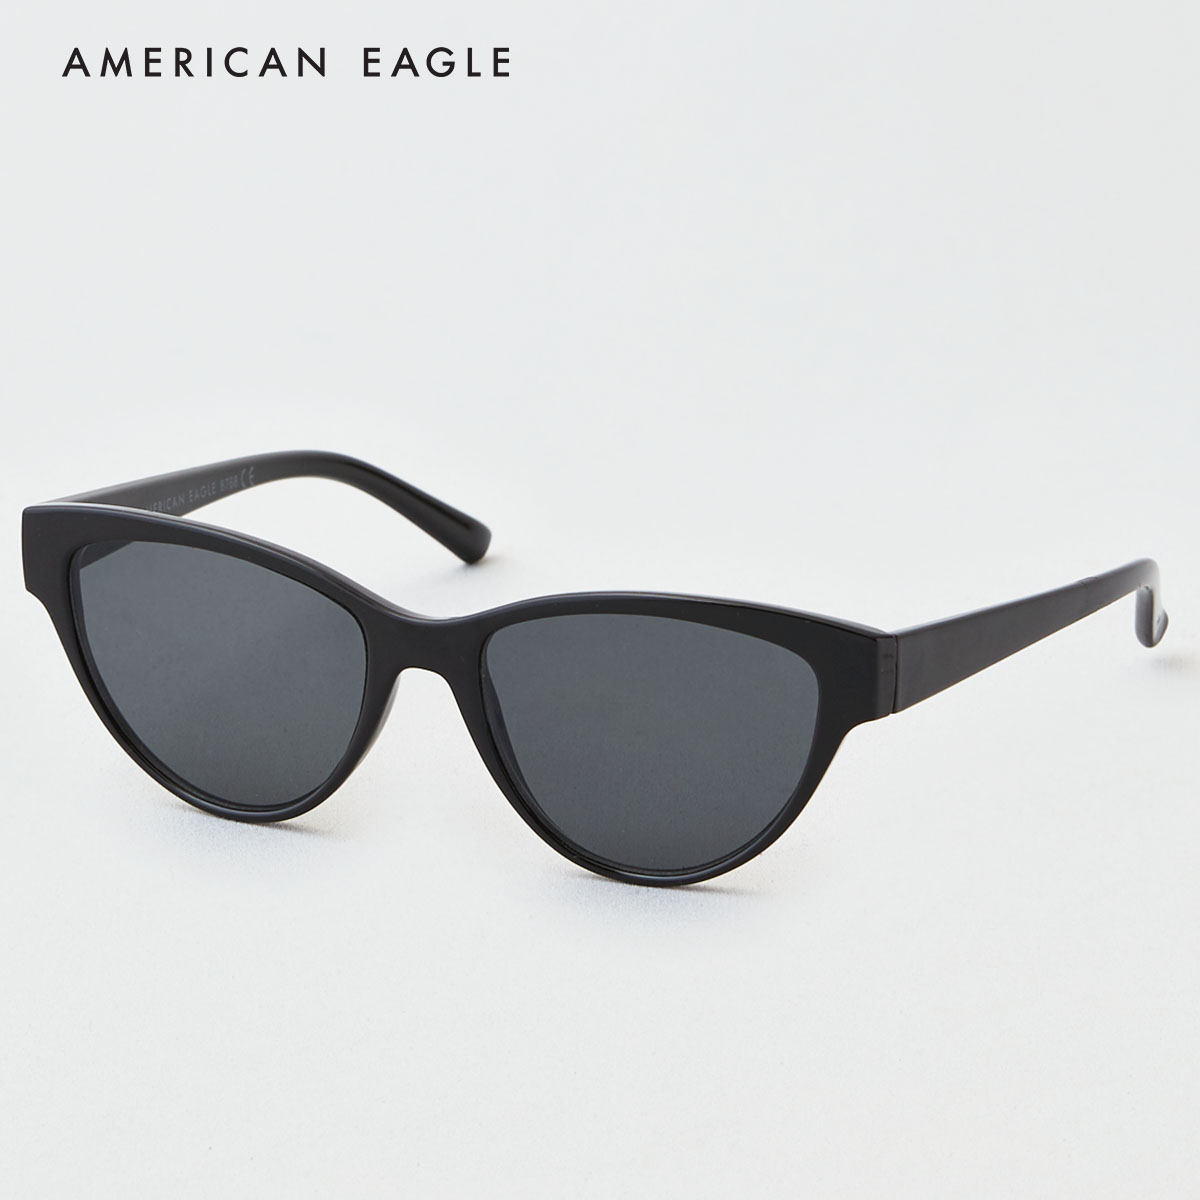 American Eagle Soft Cat Eye Sunglasses แว่นตา ผู้หญิง แฟชั่น(048-8768-001)